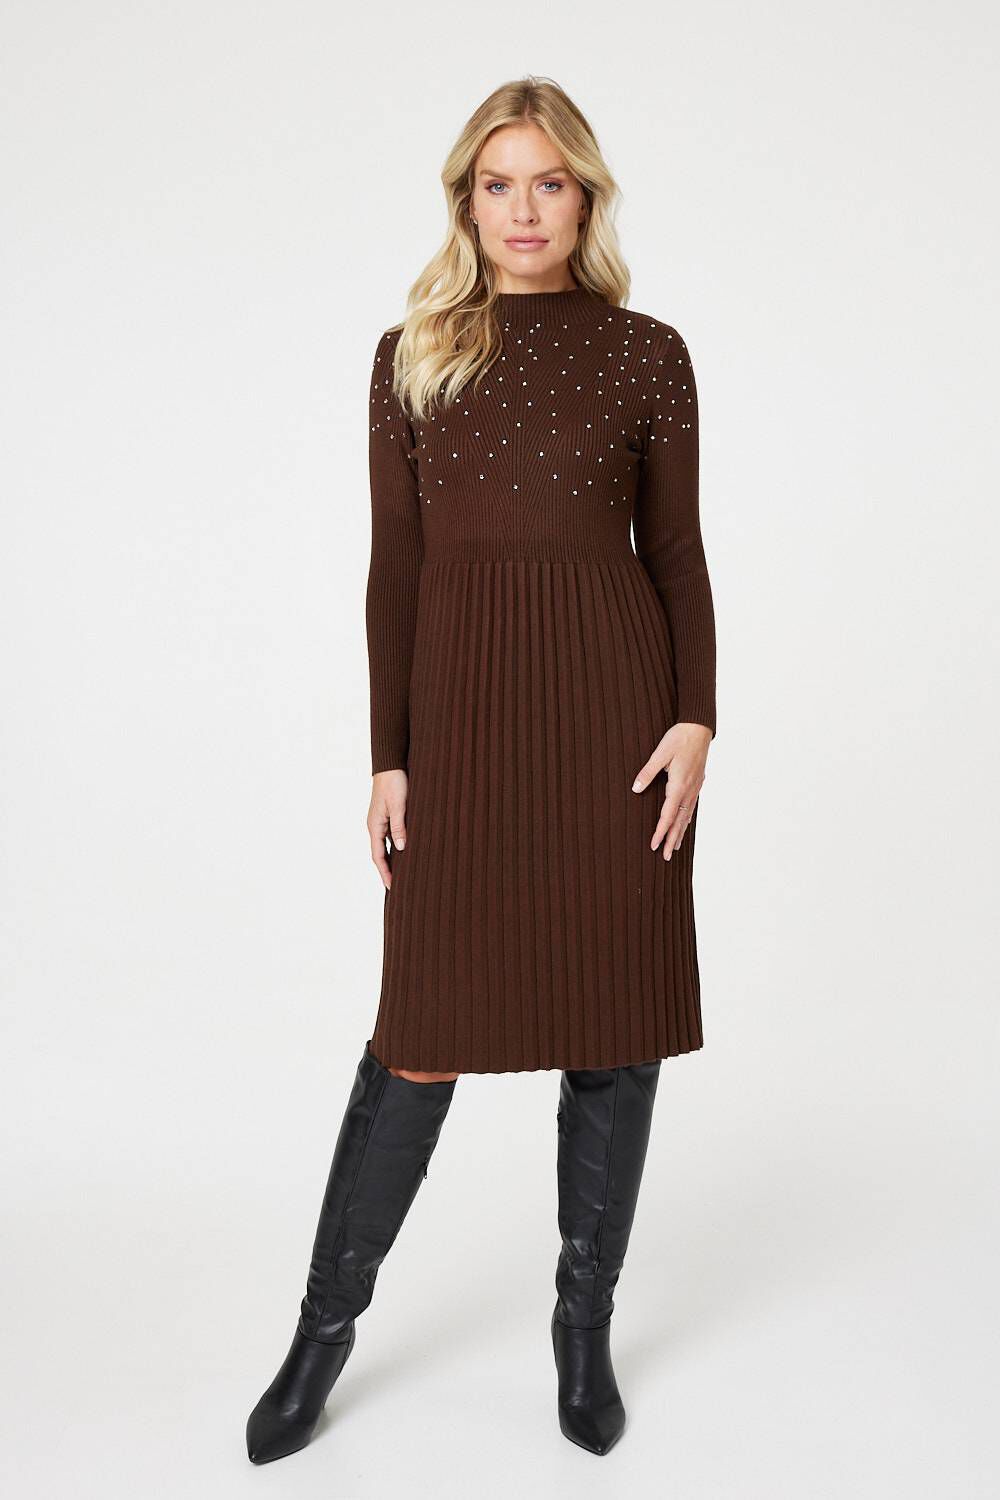 Izabel London Women’s Brown Viscose Embellished High Neck Knitted Dress, Size: M